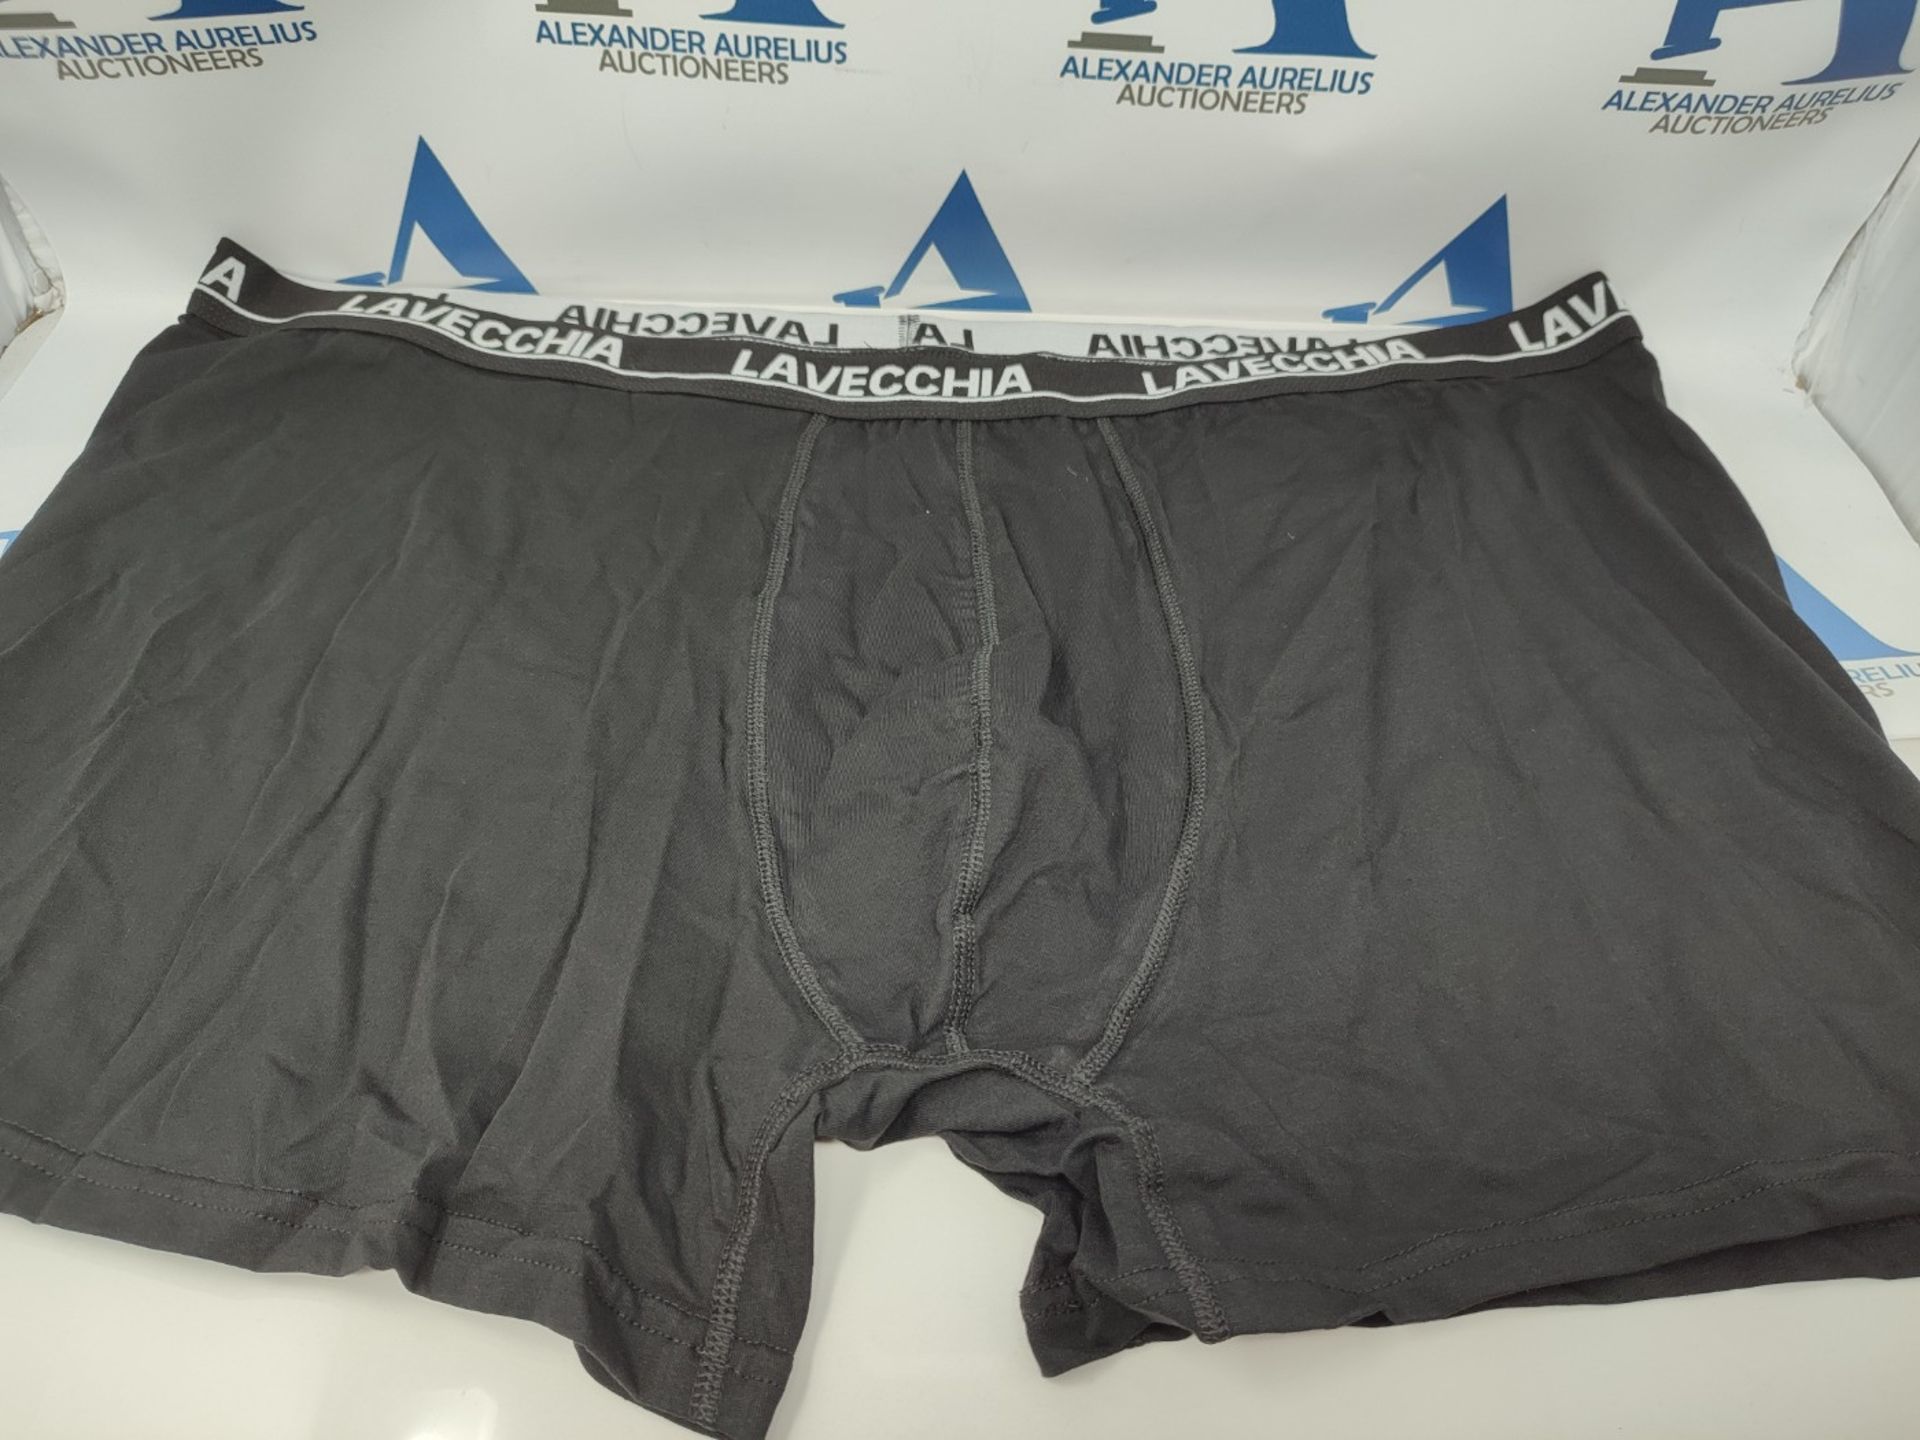 Lavecchia Black boxer shorts FL-1020, pack of 3. - Black - XXXXXXXL - Image 3 of 3